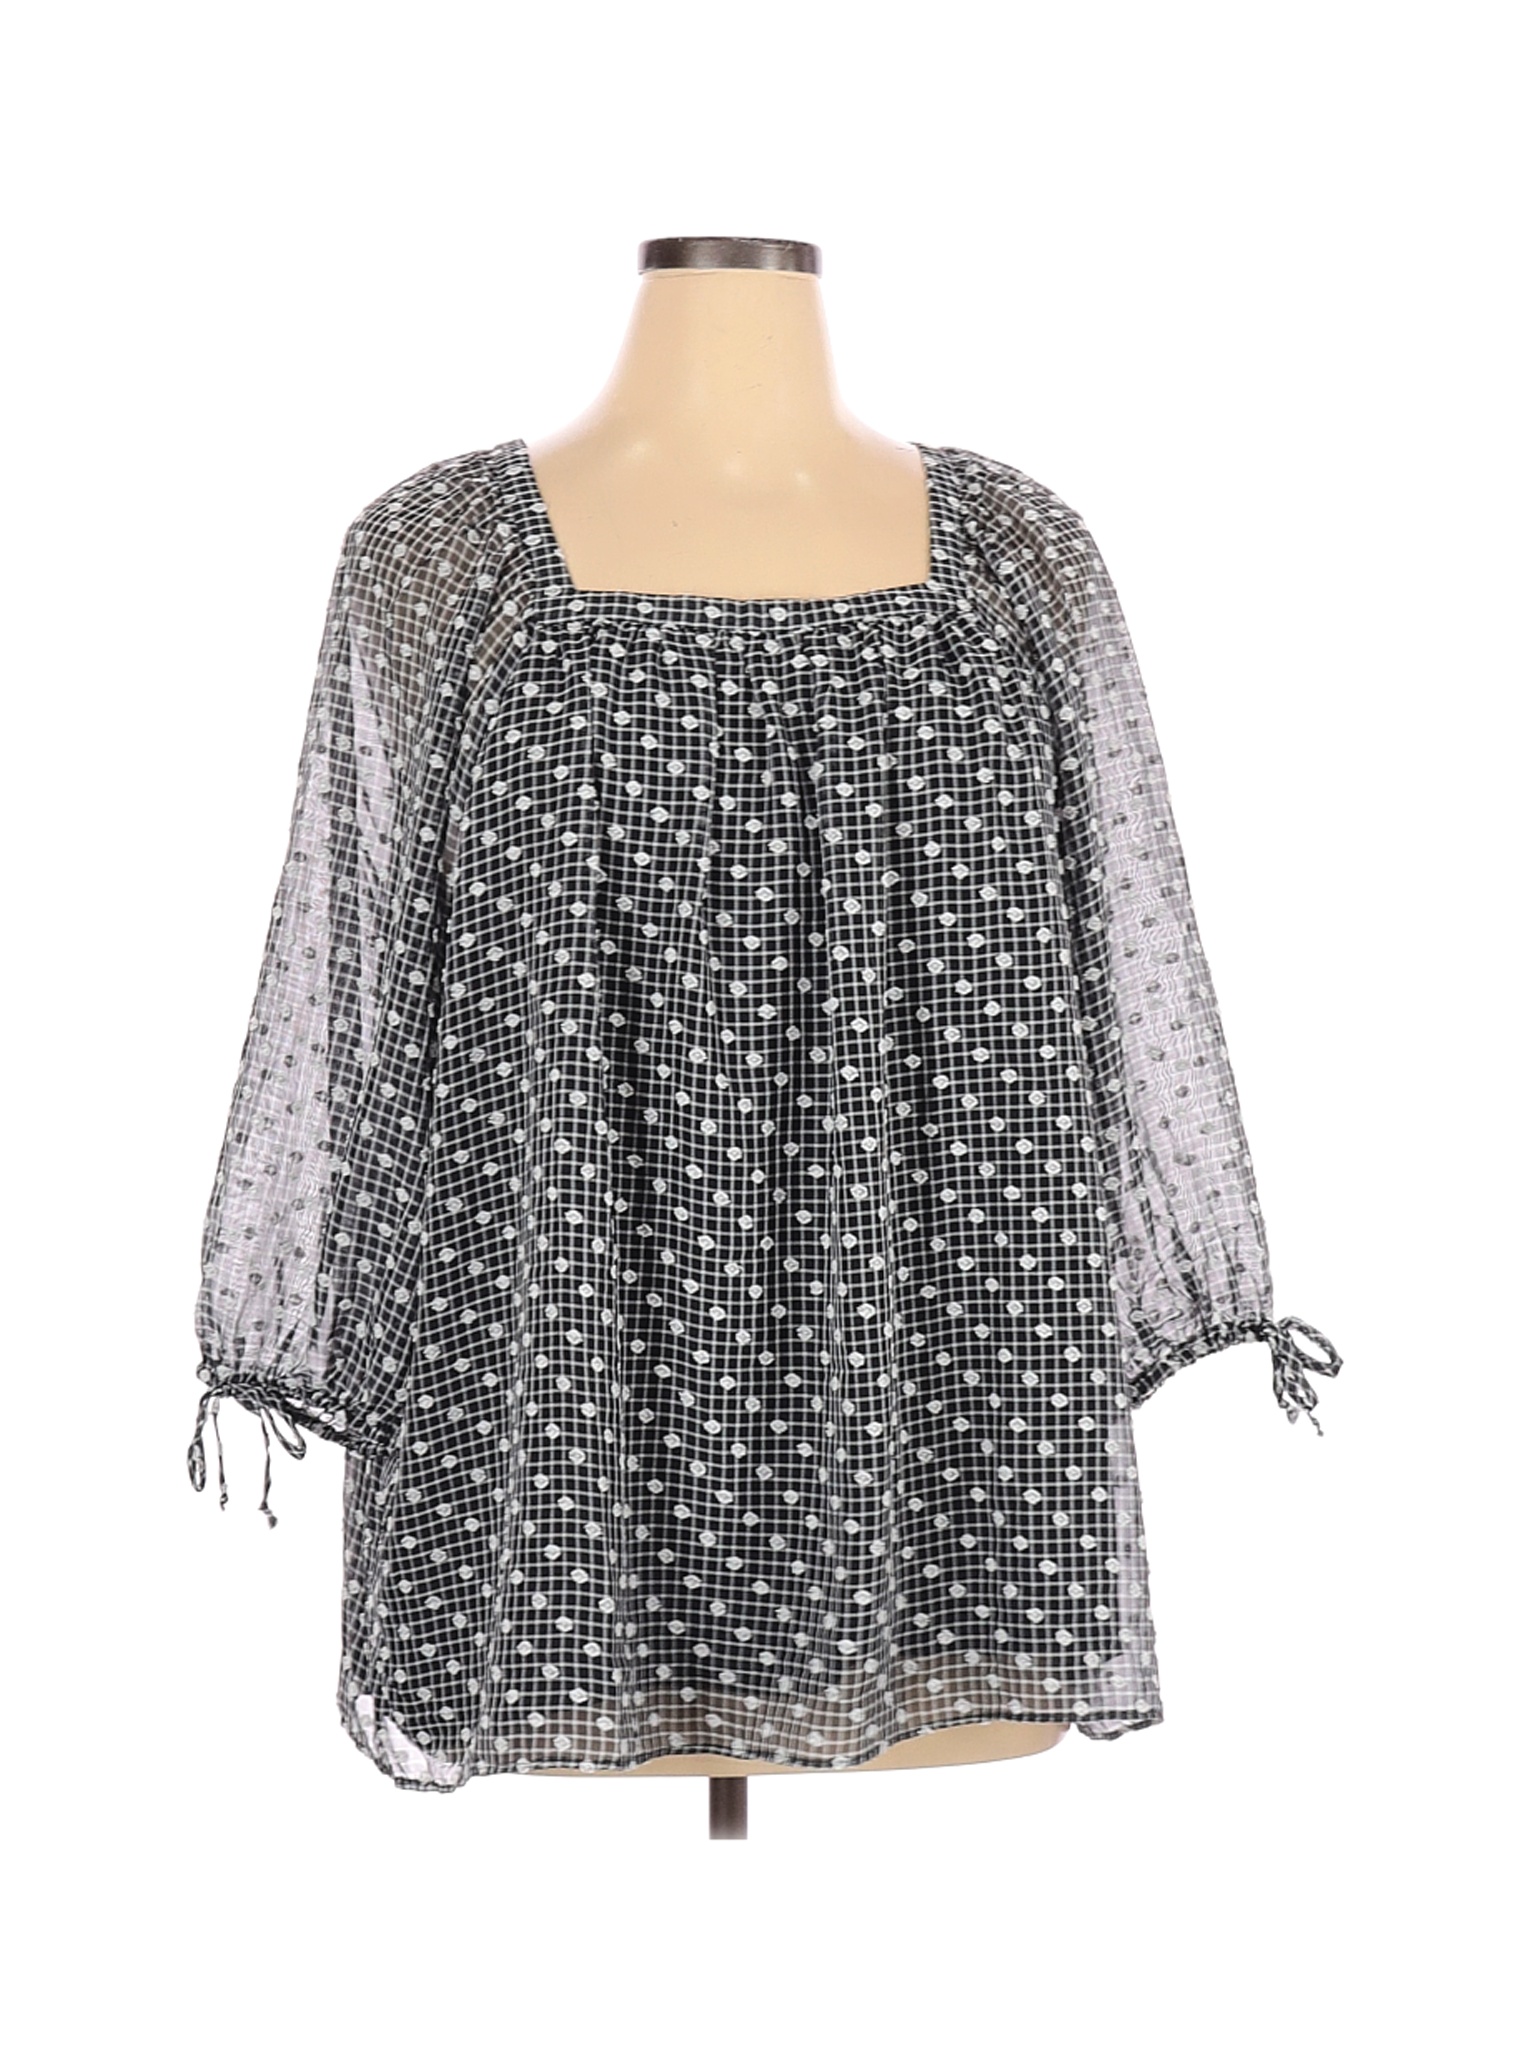 Martha Stewart Women Black 3/4 Sleeve Blouse XL | eBay